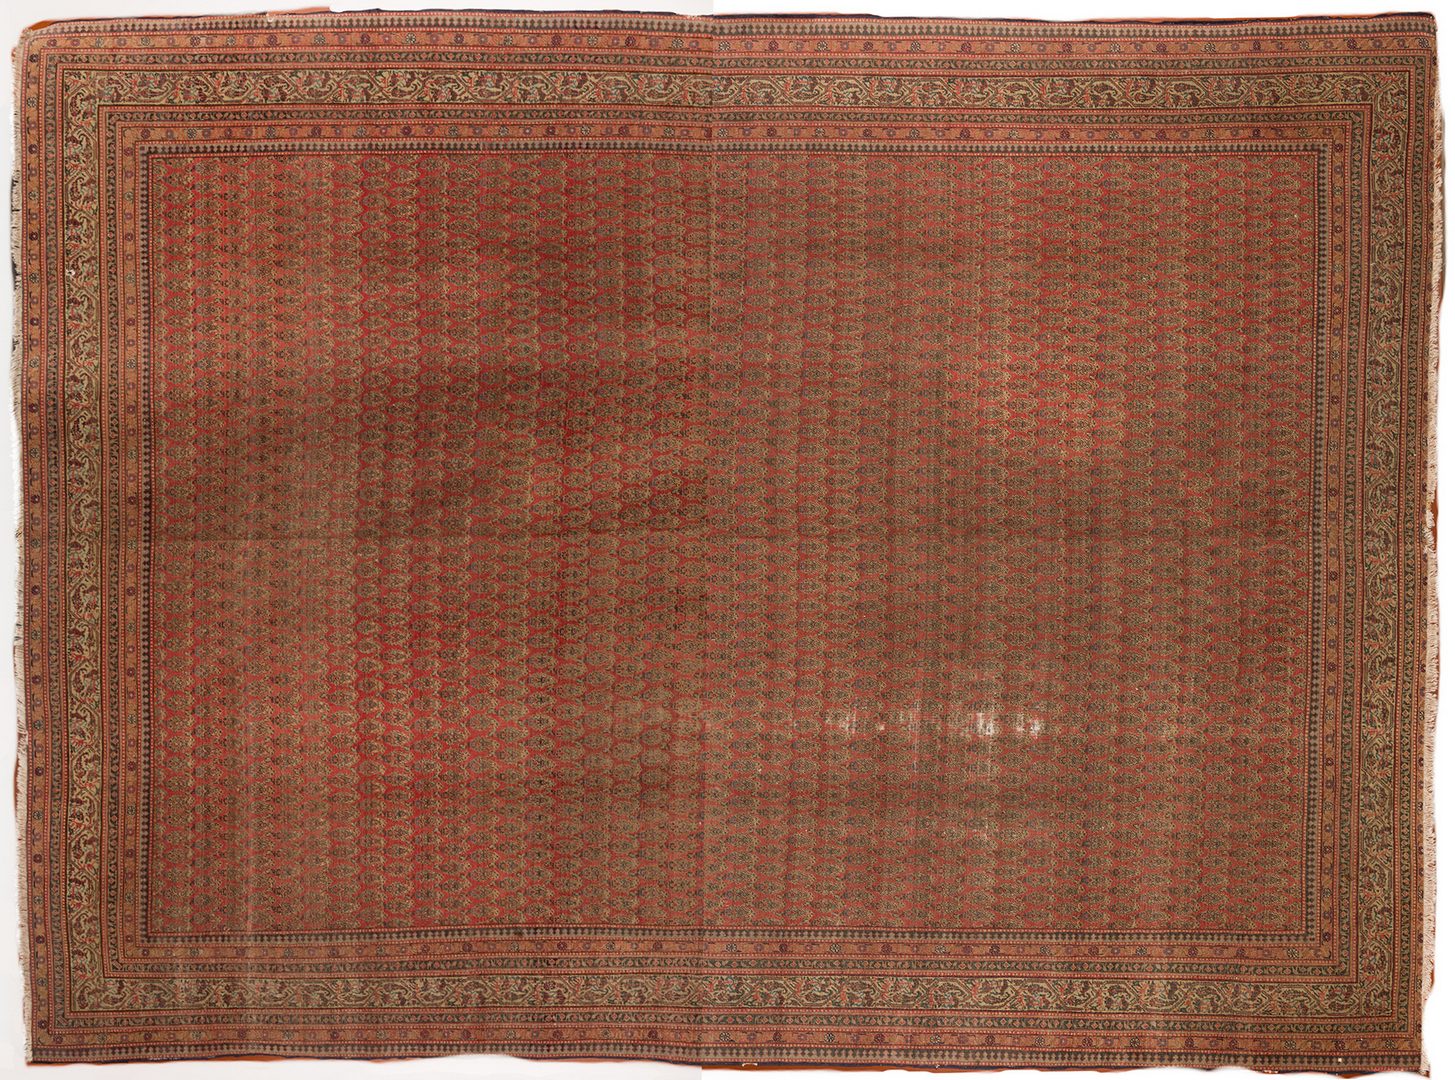 Lot 861: Antique Persian Saraband Carpet